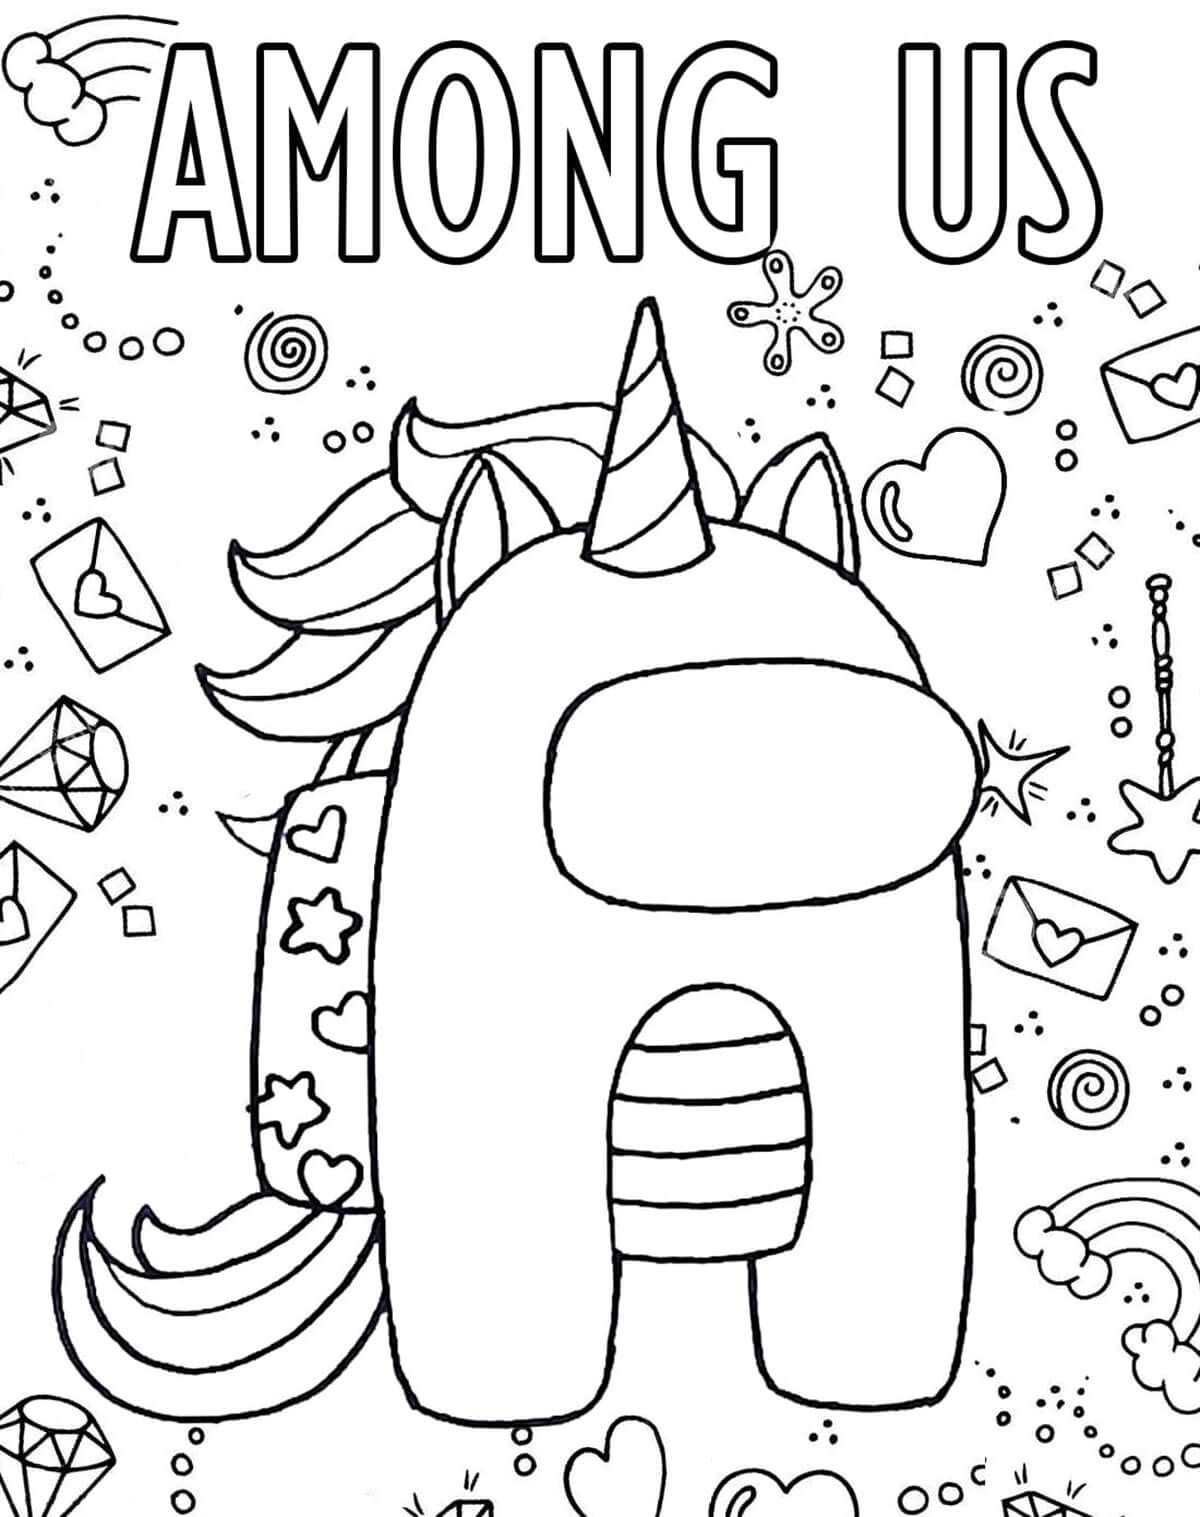 among us unicorn coloring page free printable coloring